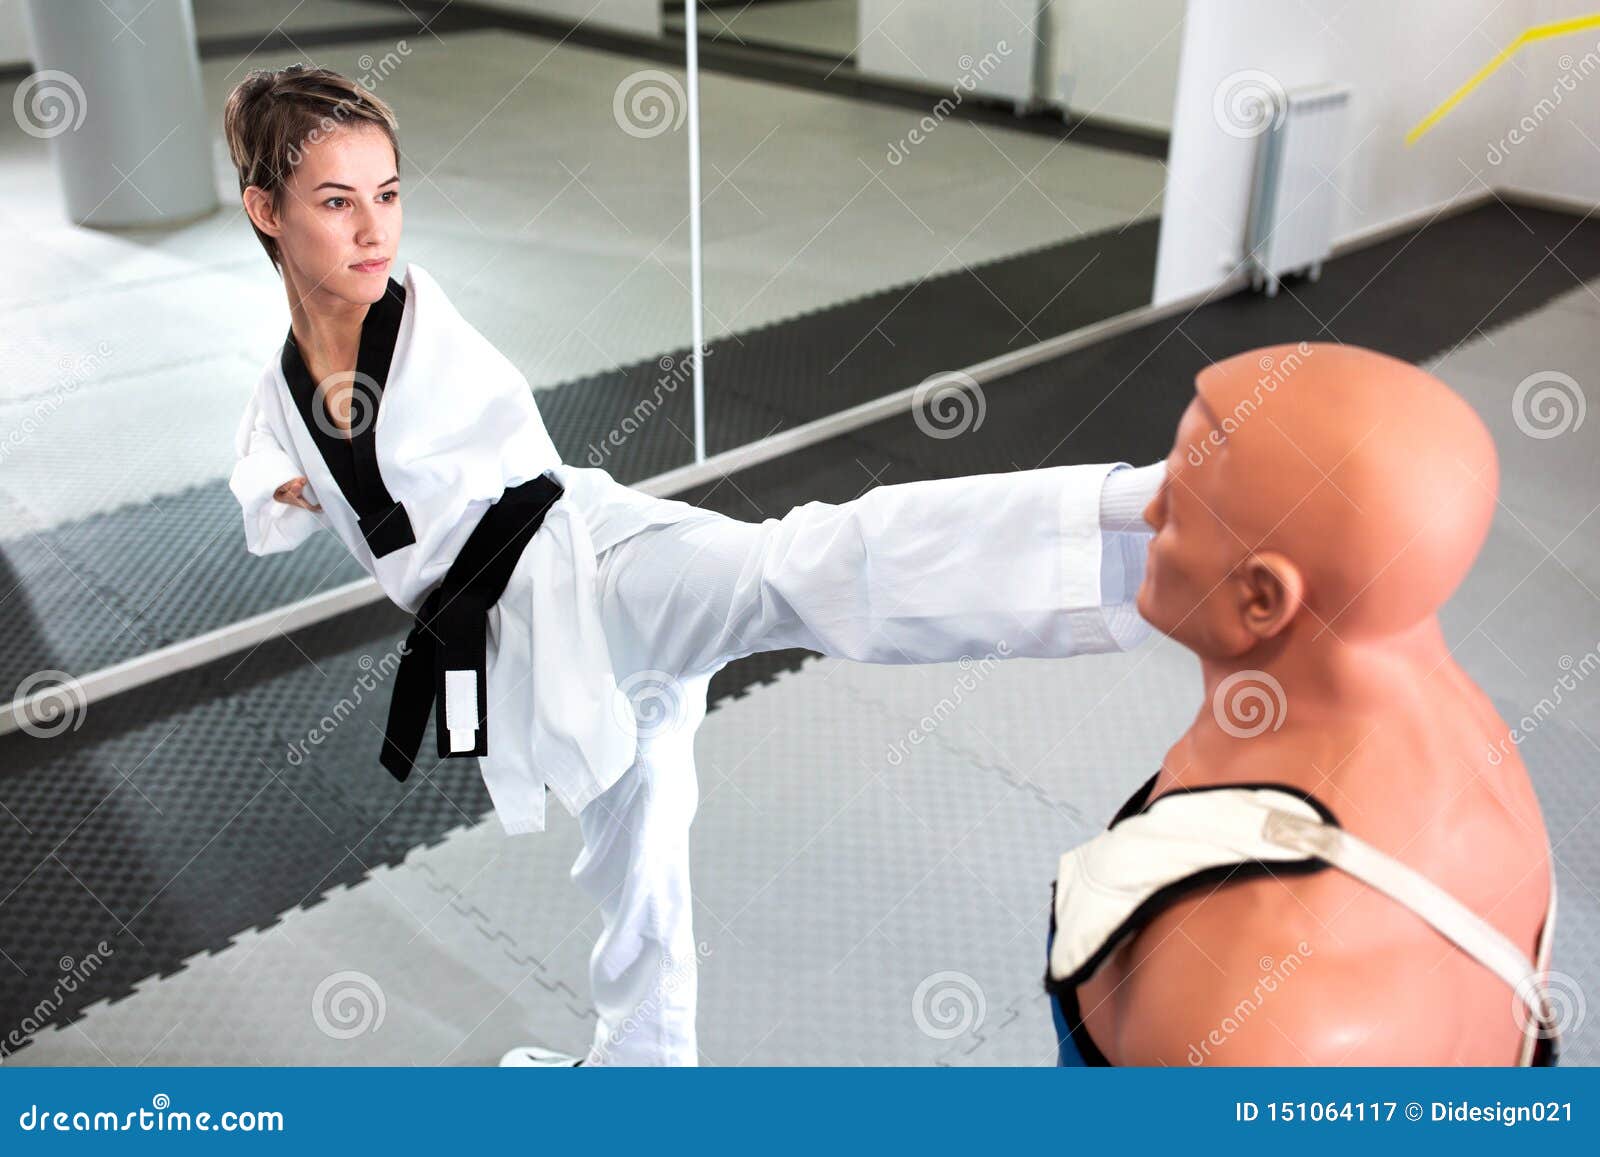 young brave and physically disabled woman training para-taekwondo